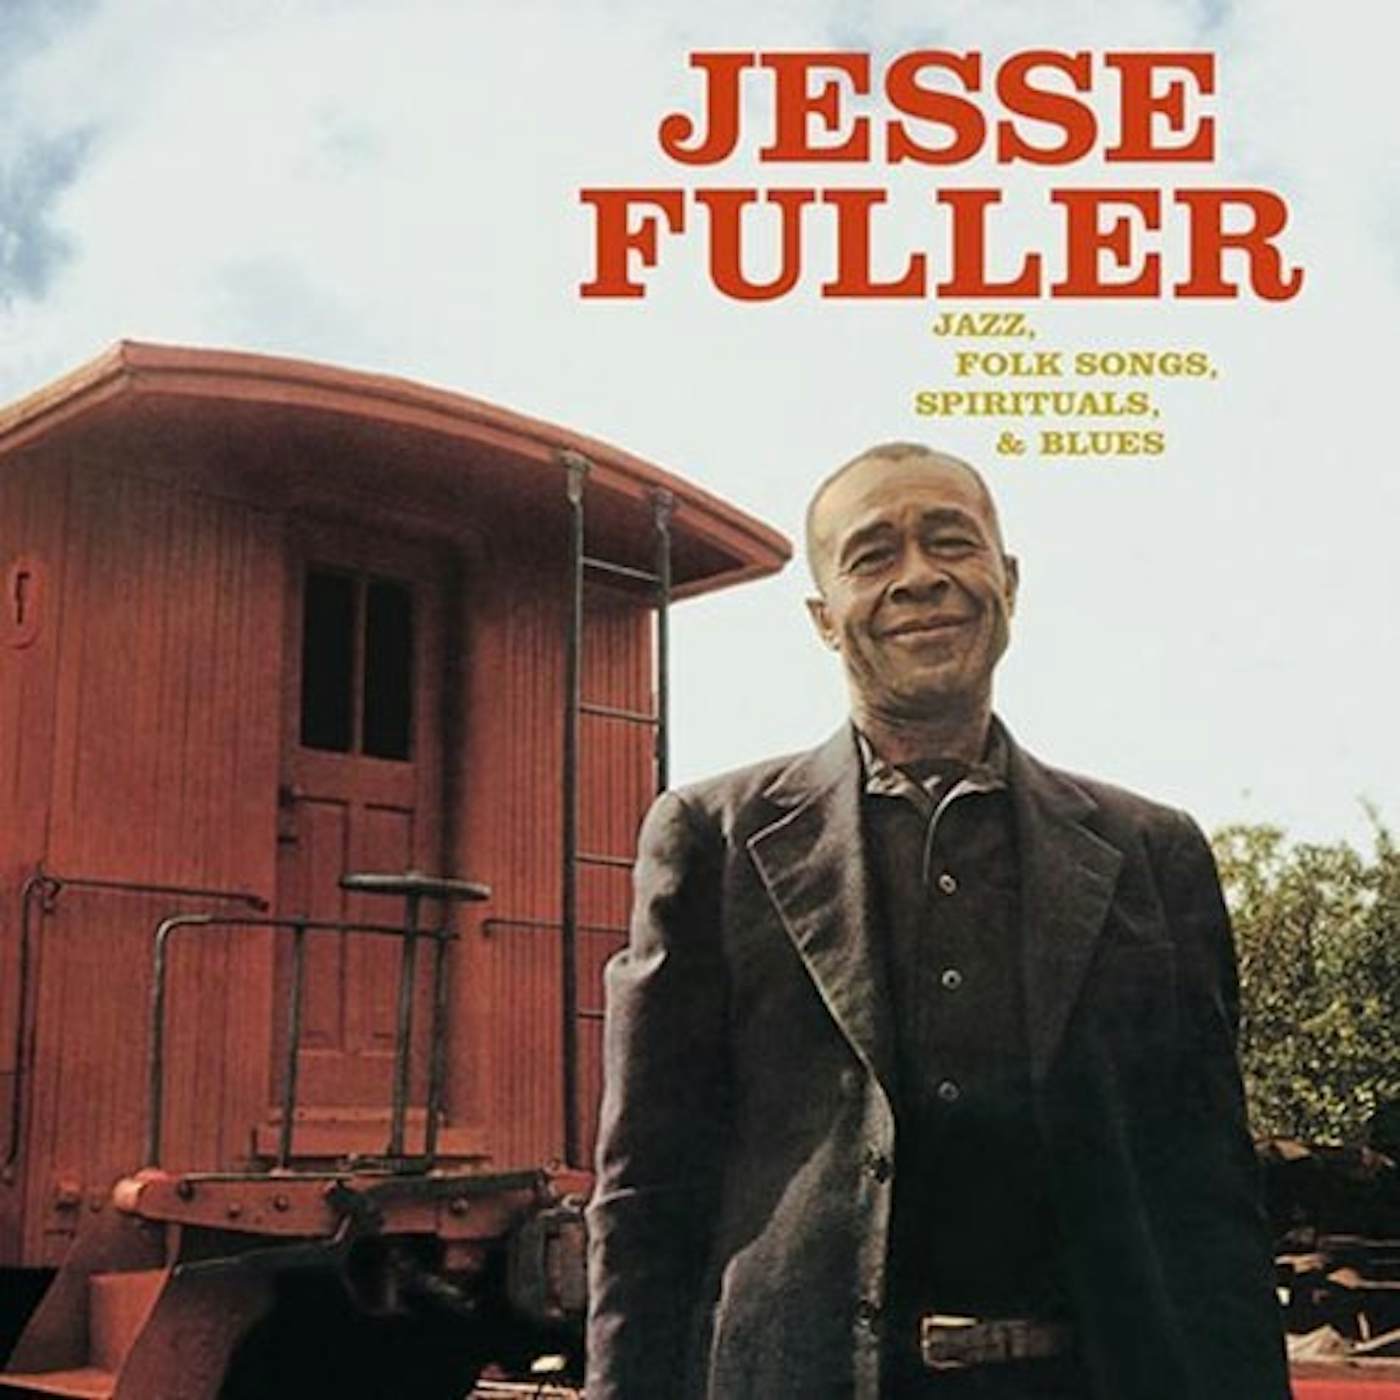 Jesse Fuller JAZZ FOLK SONGS SPIRITUALS & BLUES Vinyl Record